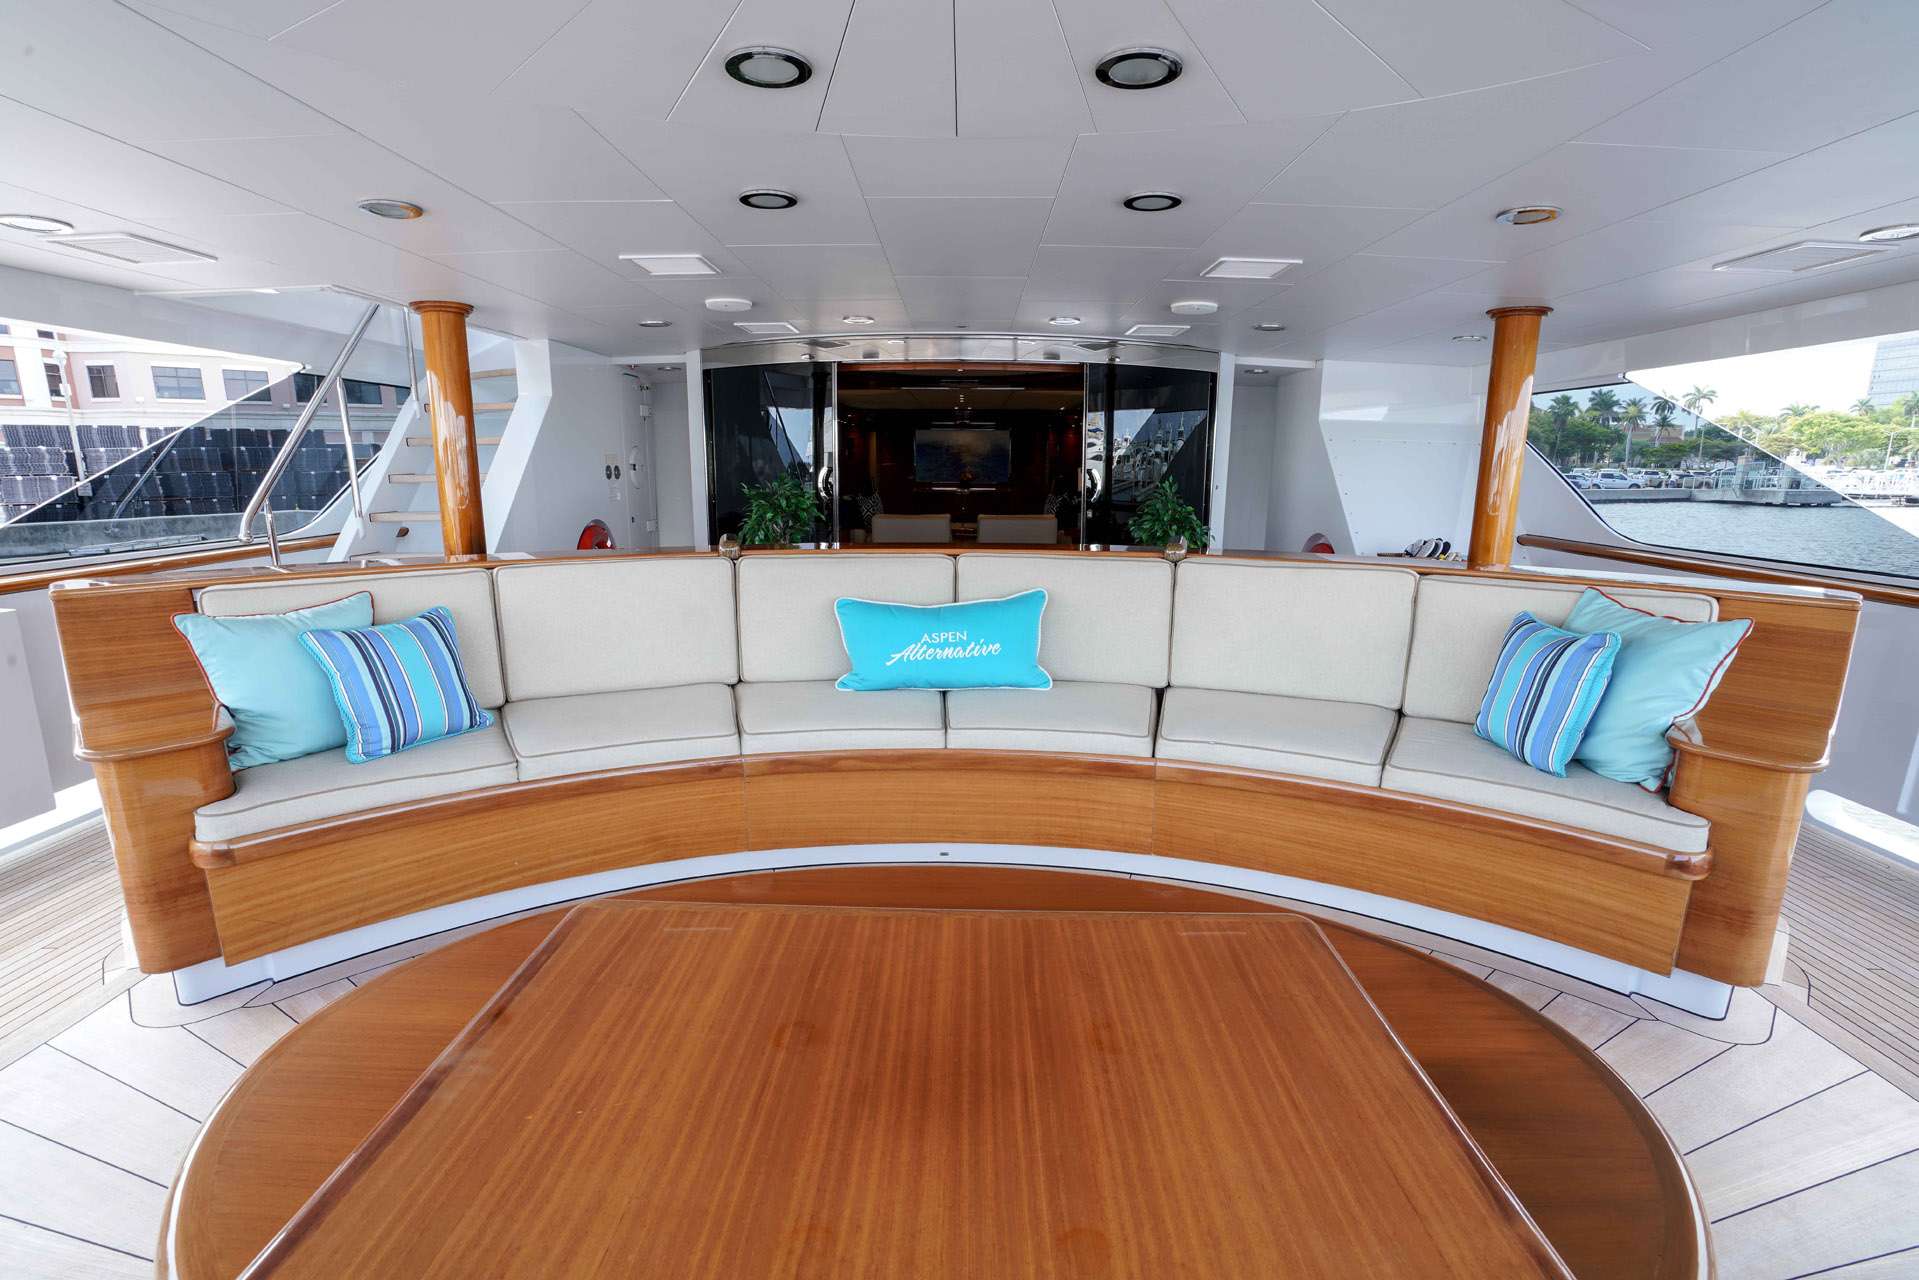 Motor Yacht 'ASPEN ALTERNATIVE' Aft Deck, 10 PAX, 9 Crew, 164.00 Ft, 50.00 Meters, Built 2010, Trinity Yachts, Refit Year 2022